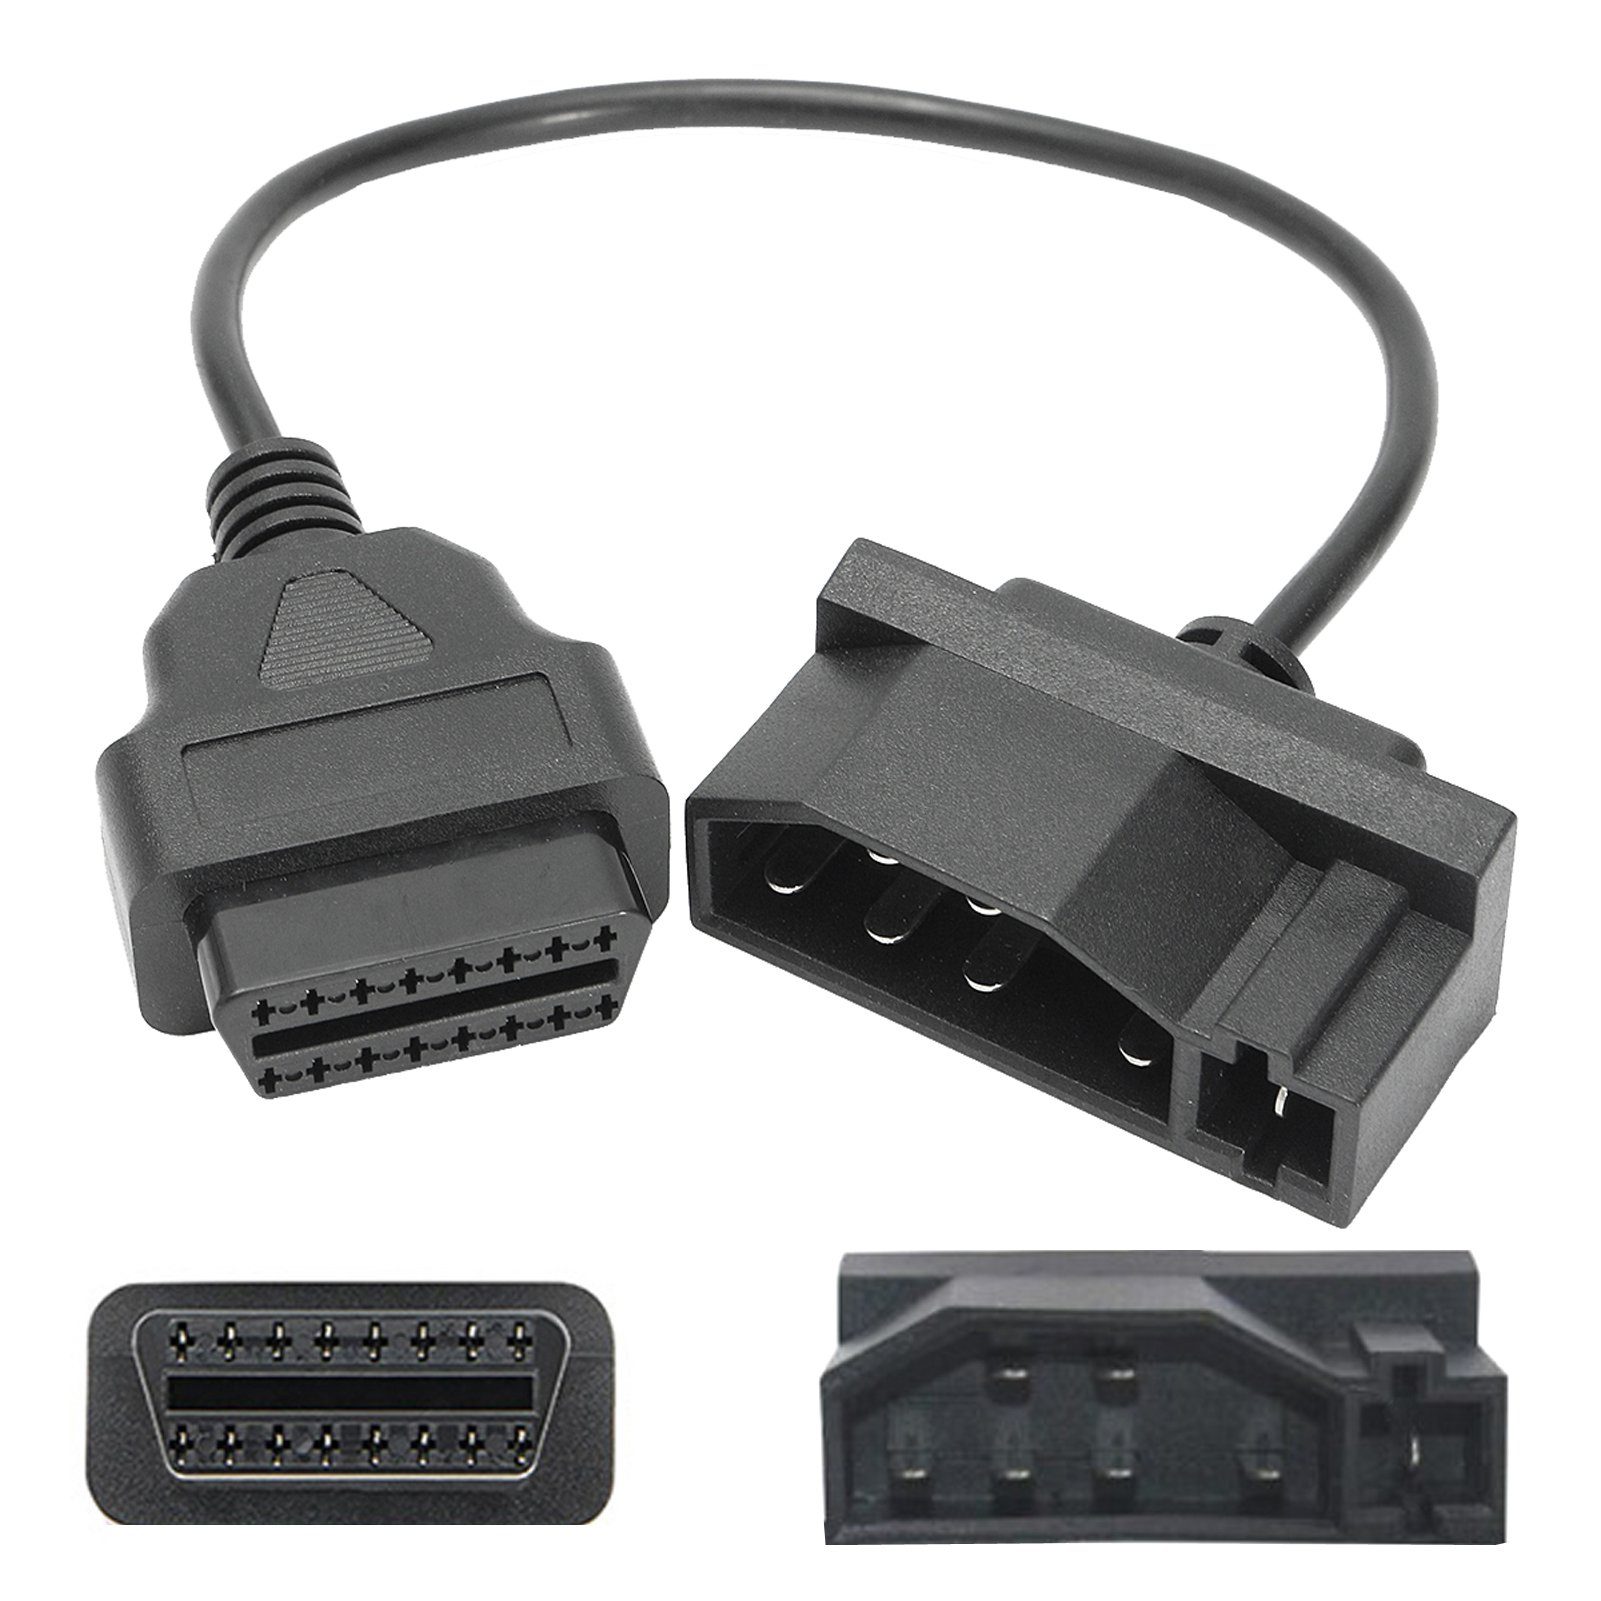 Bolwins F90C 40cm OBD2 Kabel Ford Fehler Auto 7-Pin lesen Diagnose Adapter für Elektro-Kabel